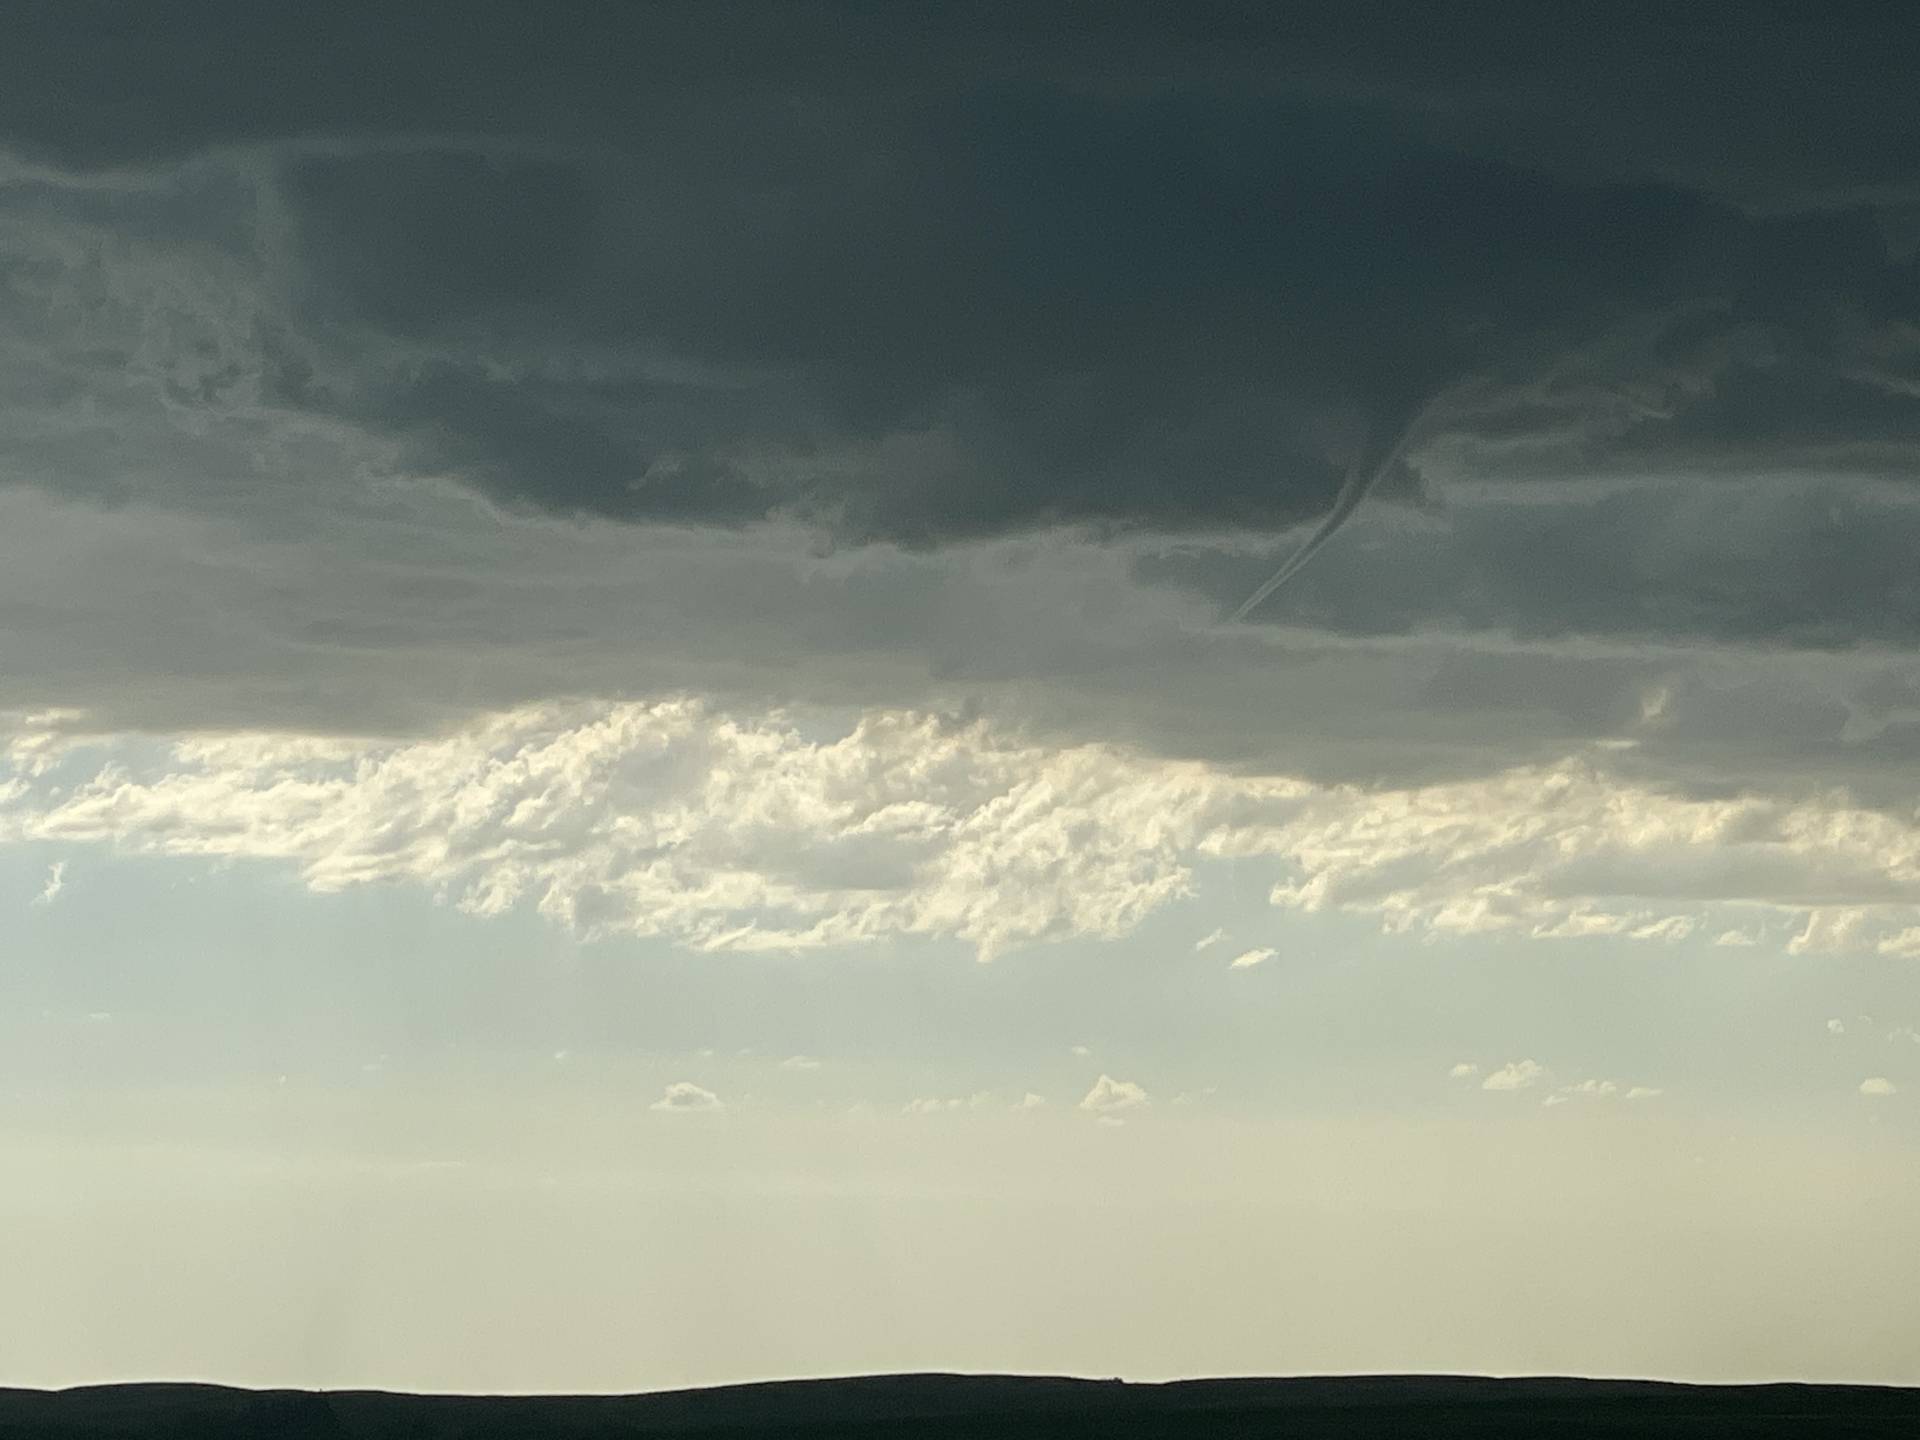 Tornado north of D’Arcy 5:42pm